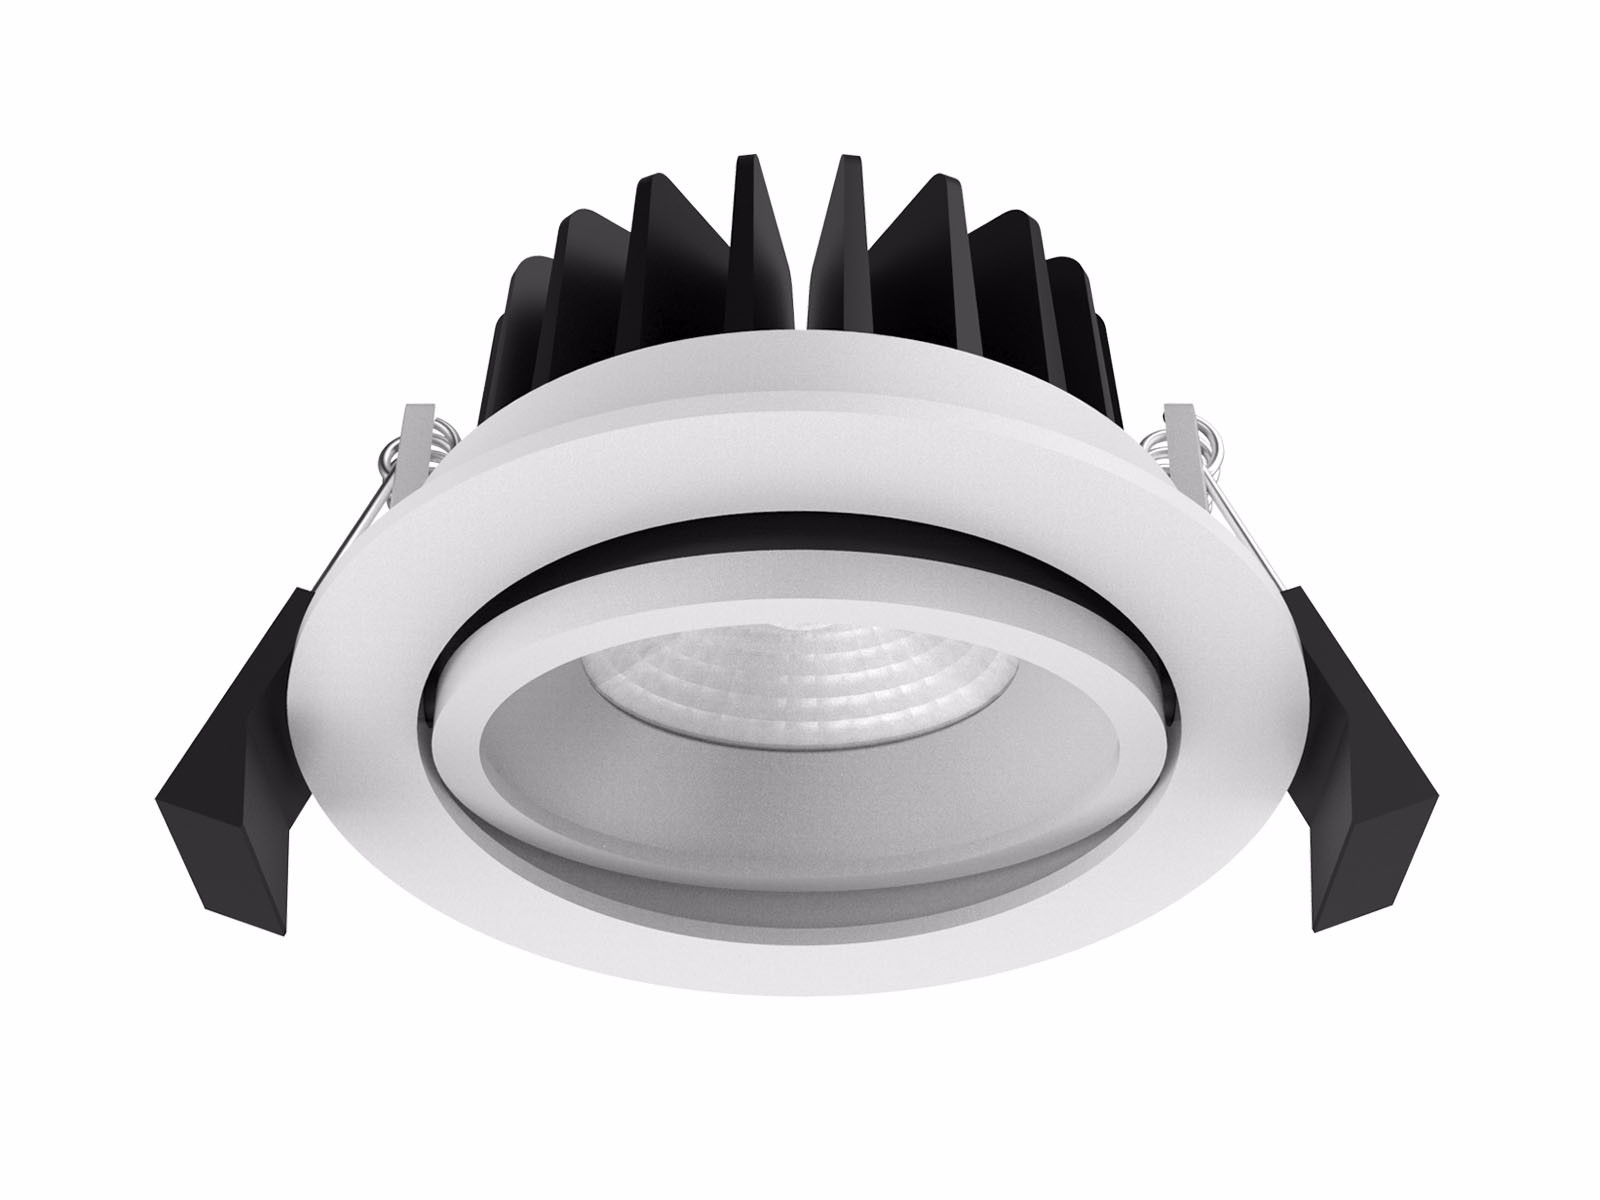 CL79 Lighting Direction Adjustable LED Downlight